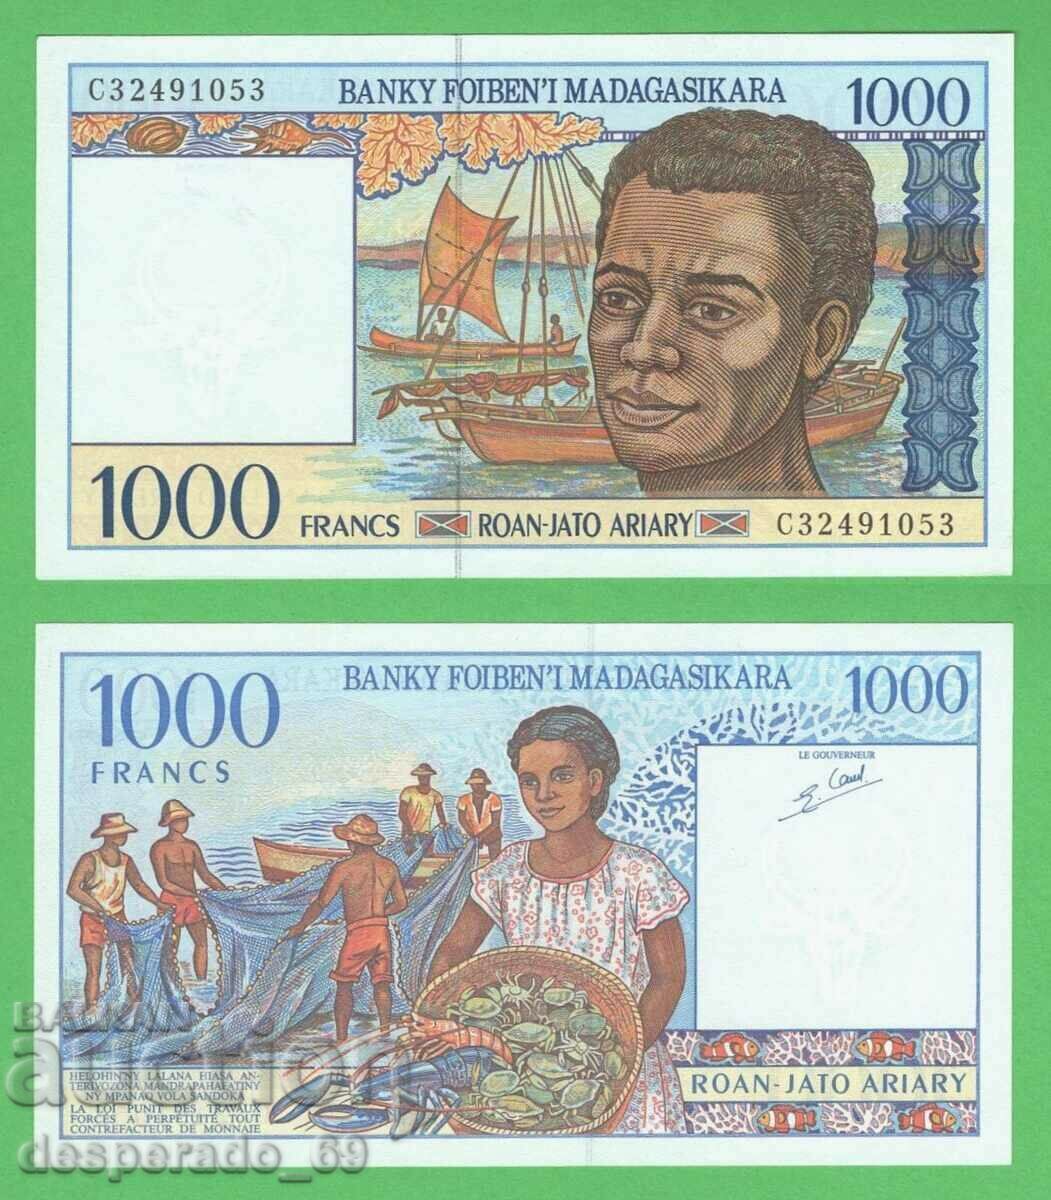 (¯`'•.¸ MADAGASCAR 1000 francs 1994 UNC ¸.•'´¯)